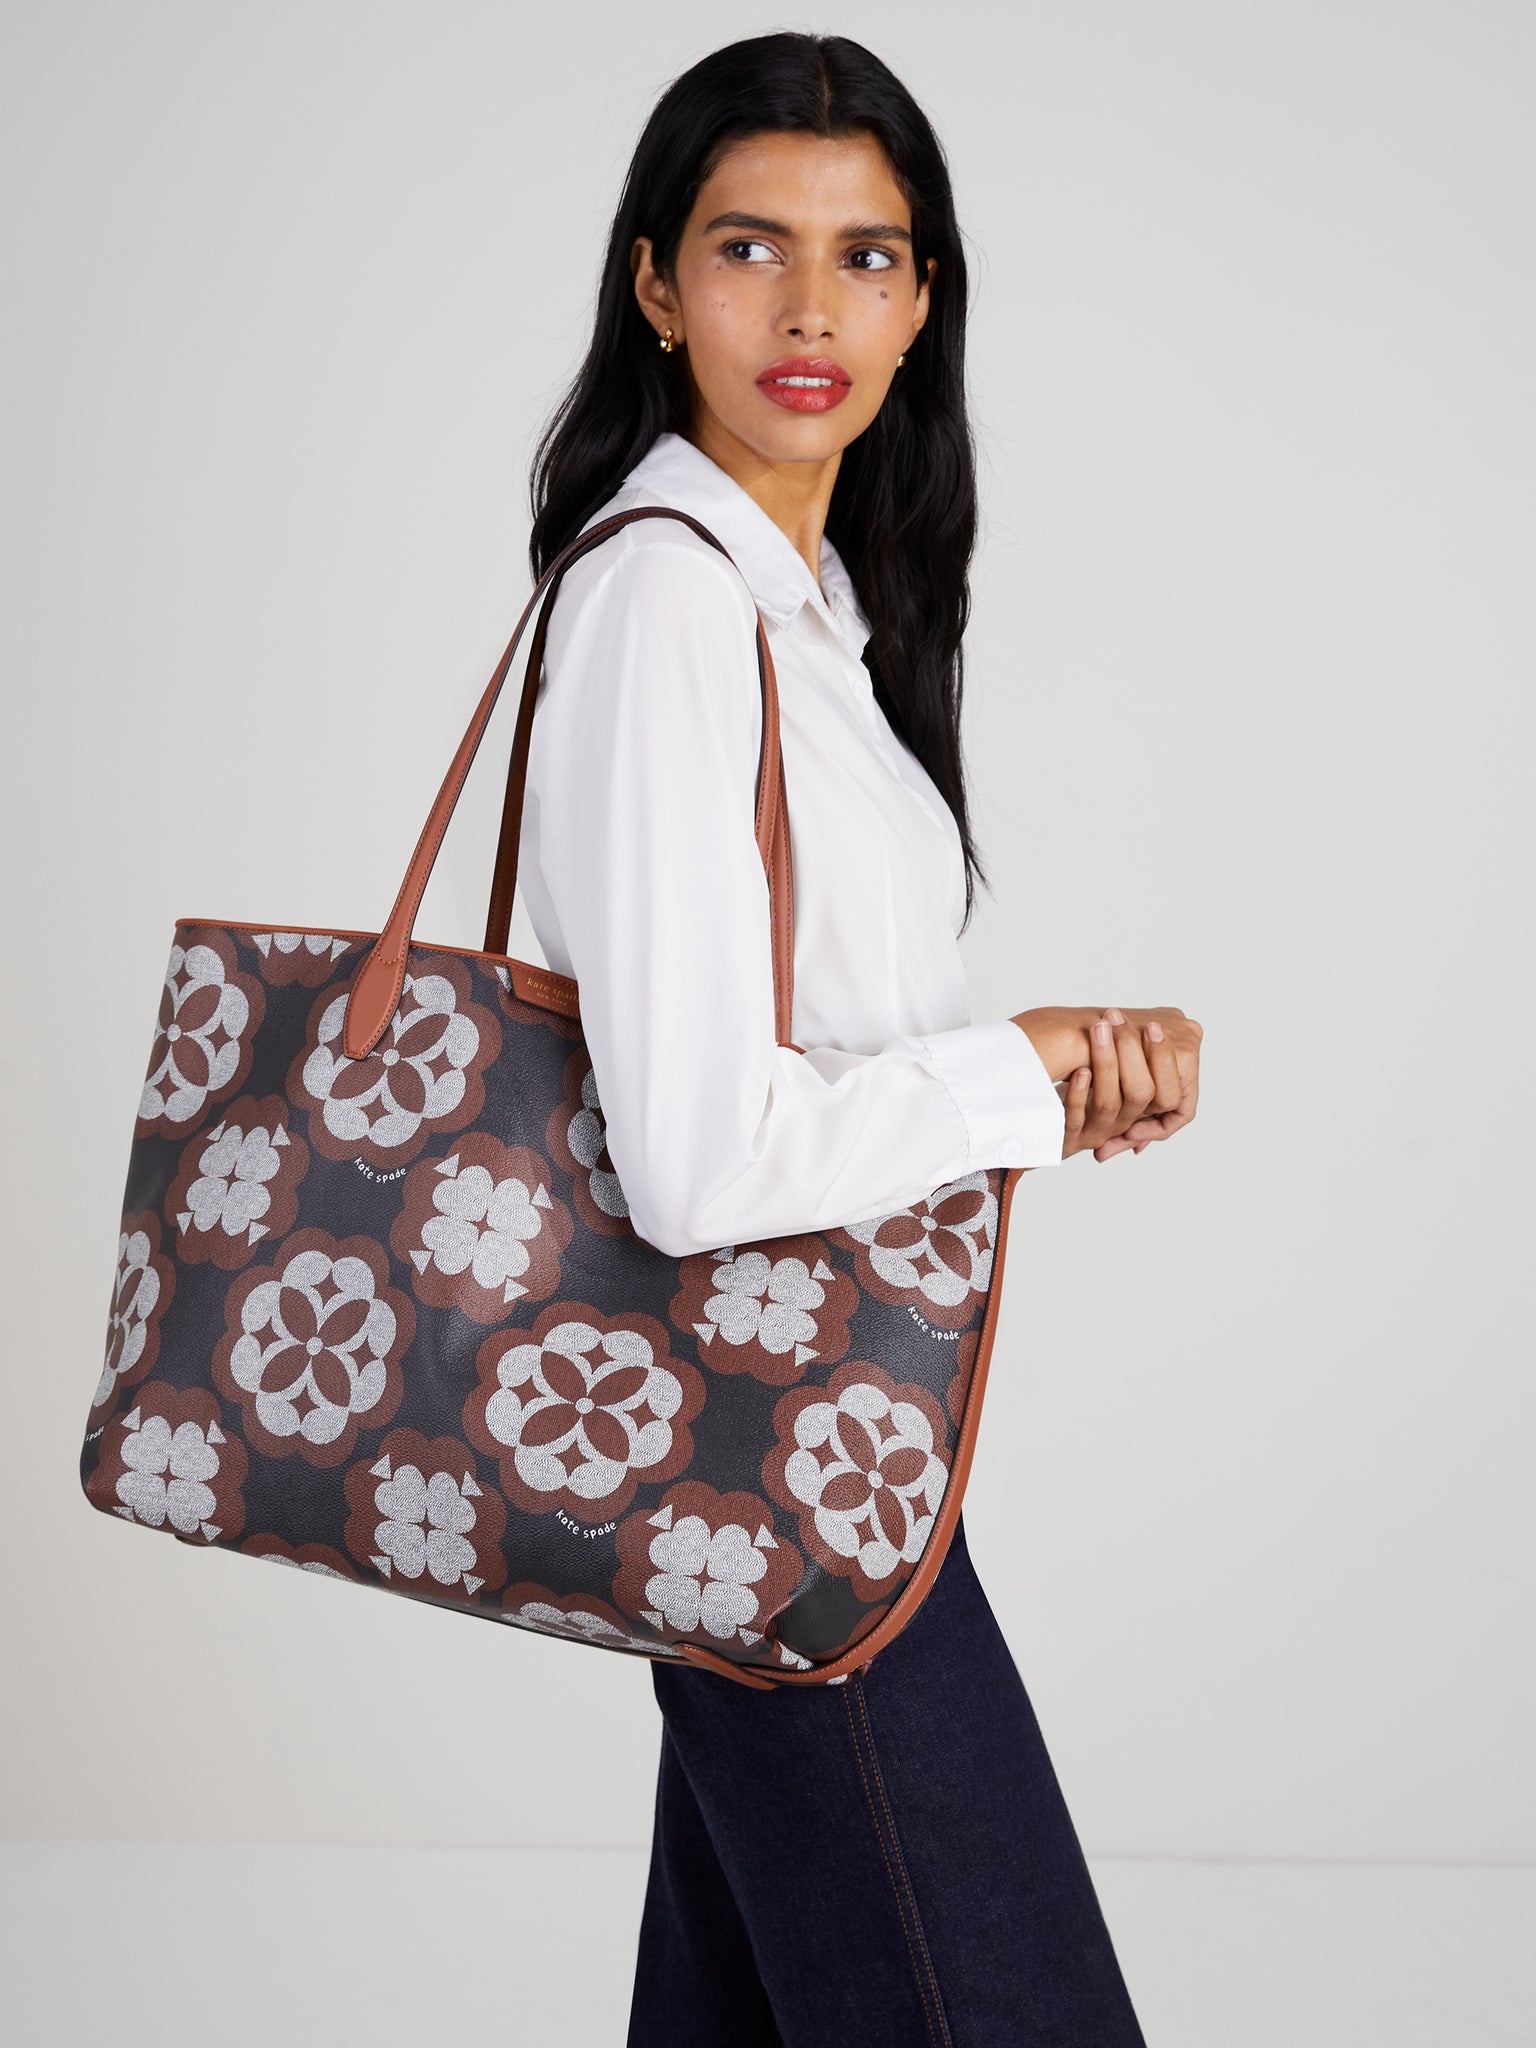 Kate Spade New York floral handbag Never used, like... - Depop